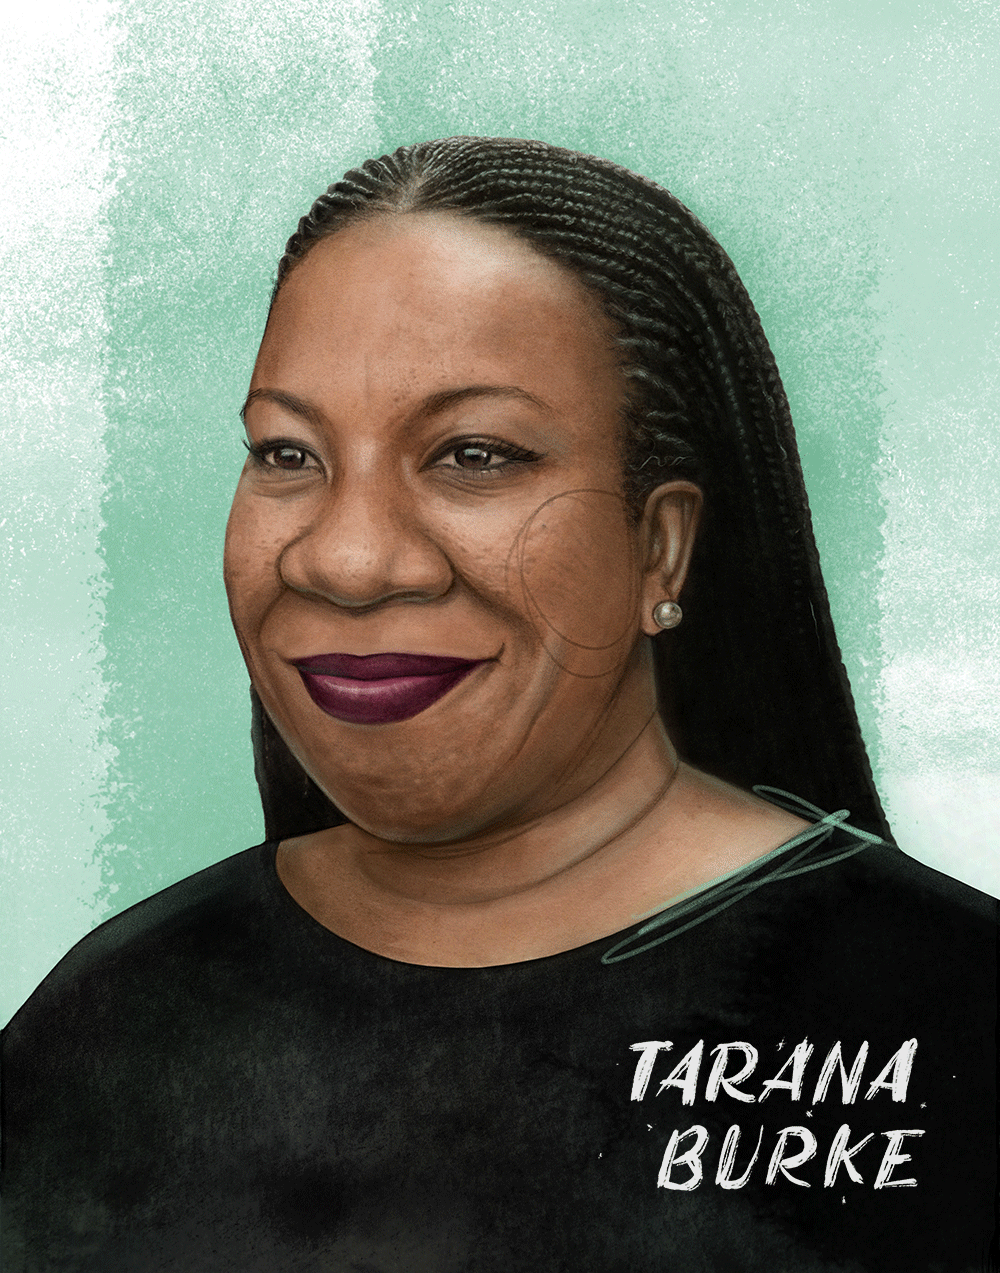 Gif portrait of Tarana Burke by Dena Cooper in honor of Black Lives Matter